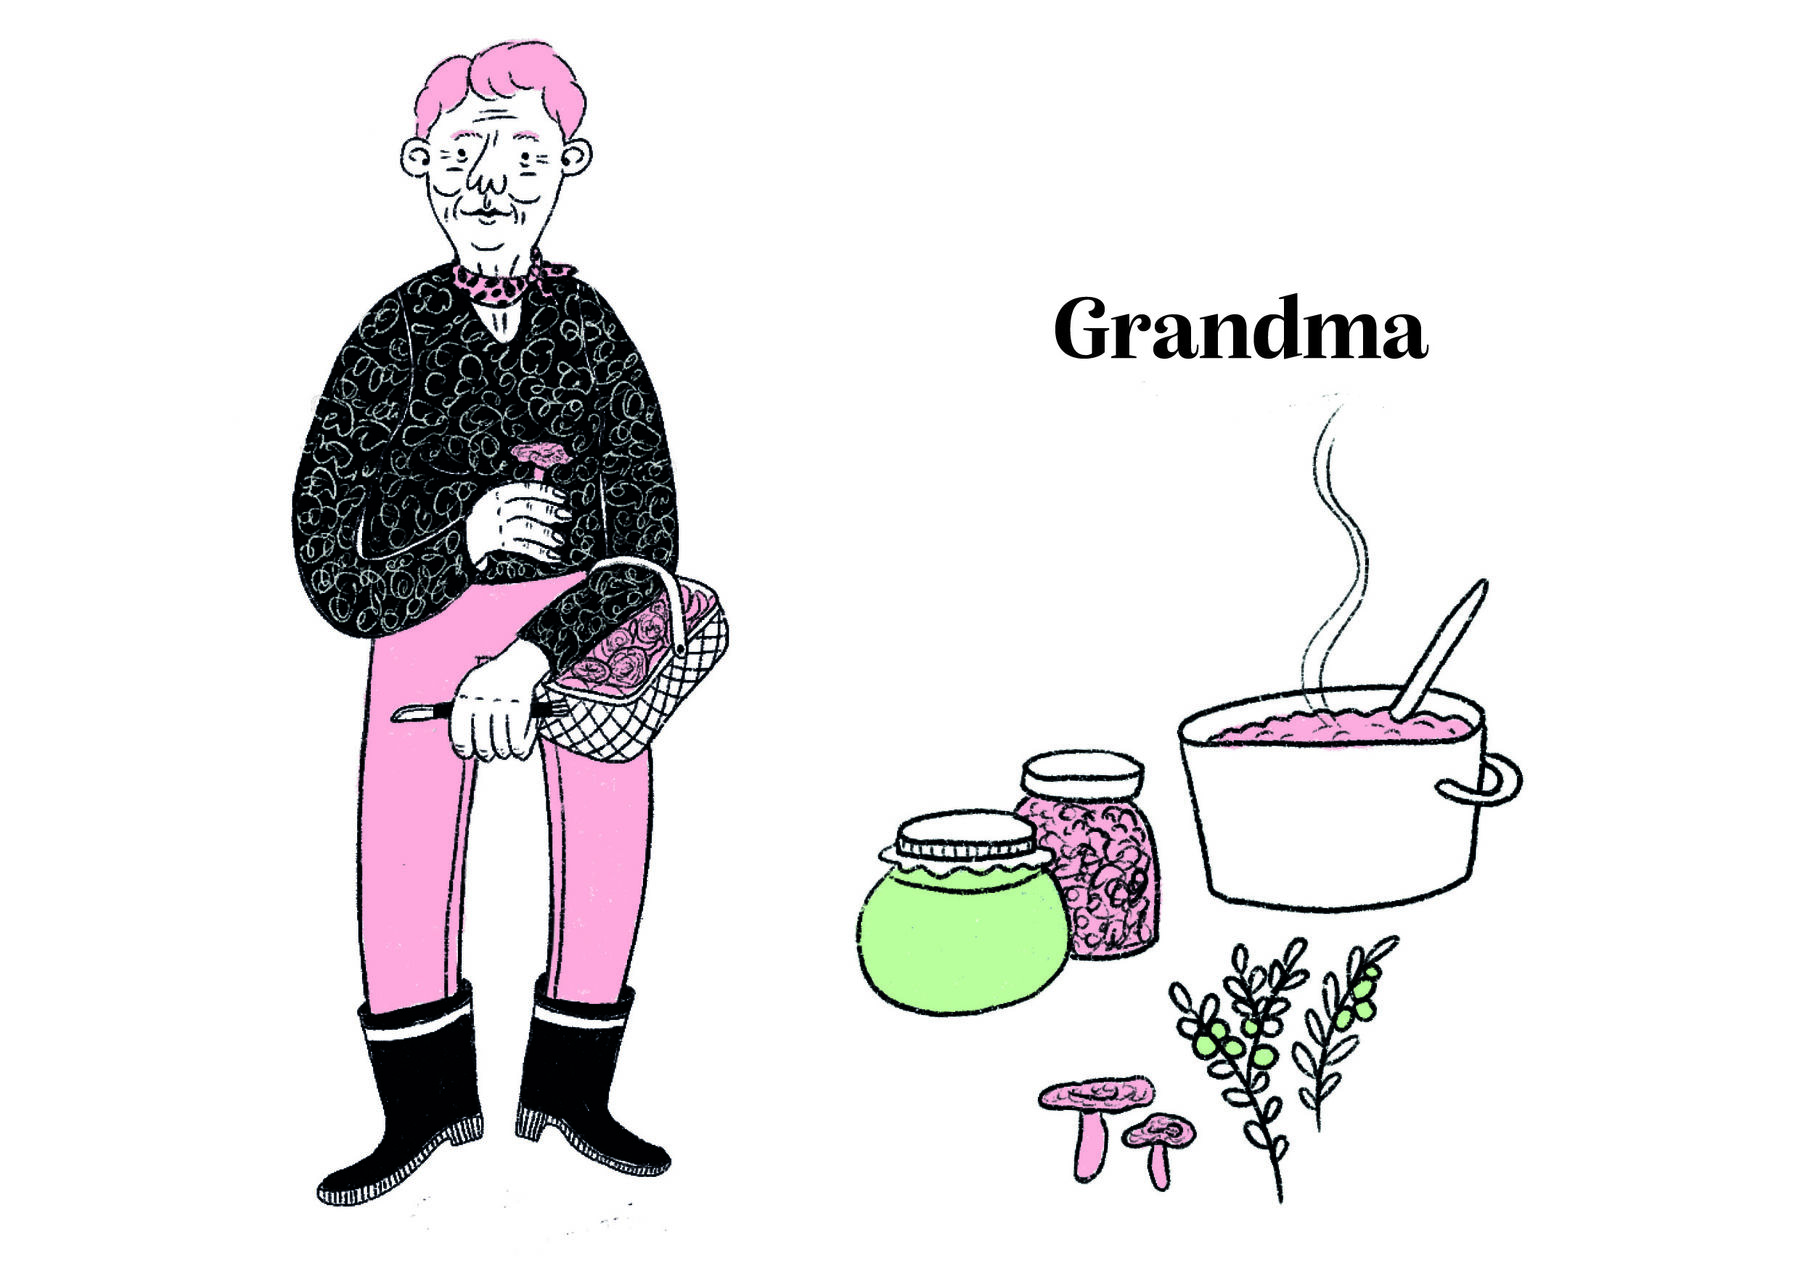 an illustration of grandma